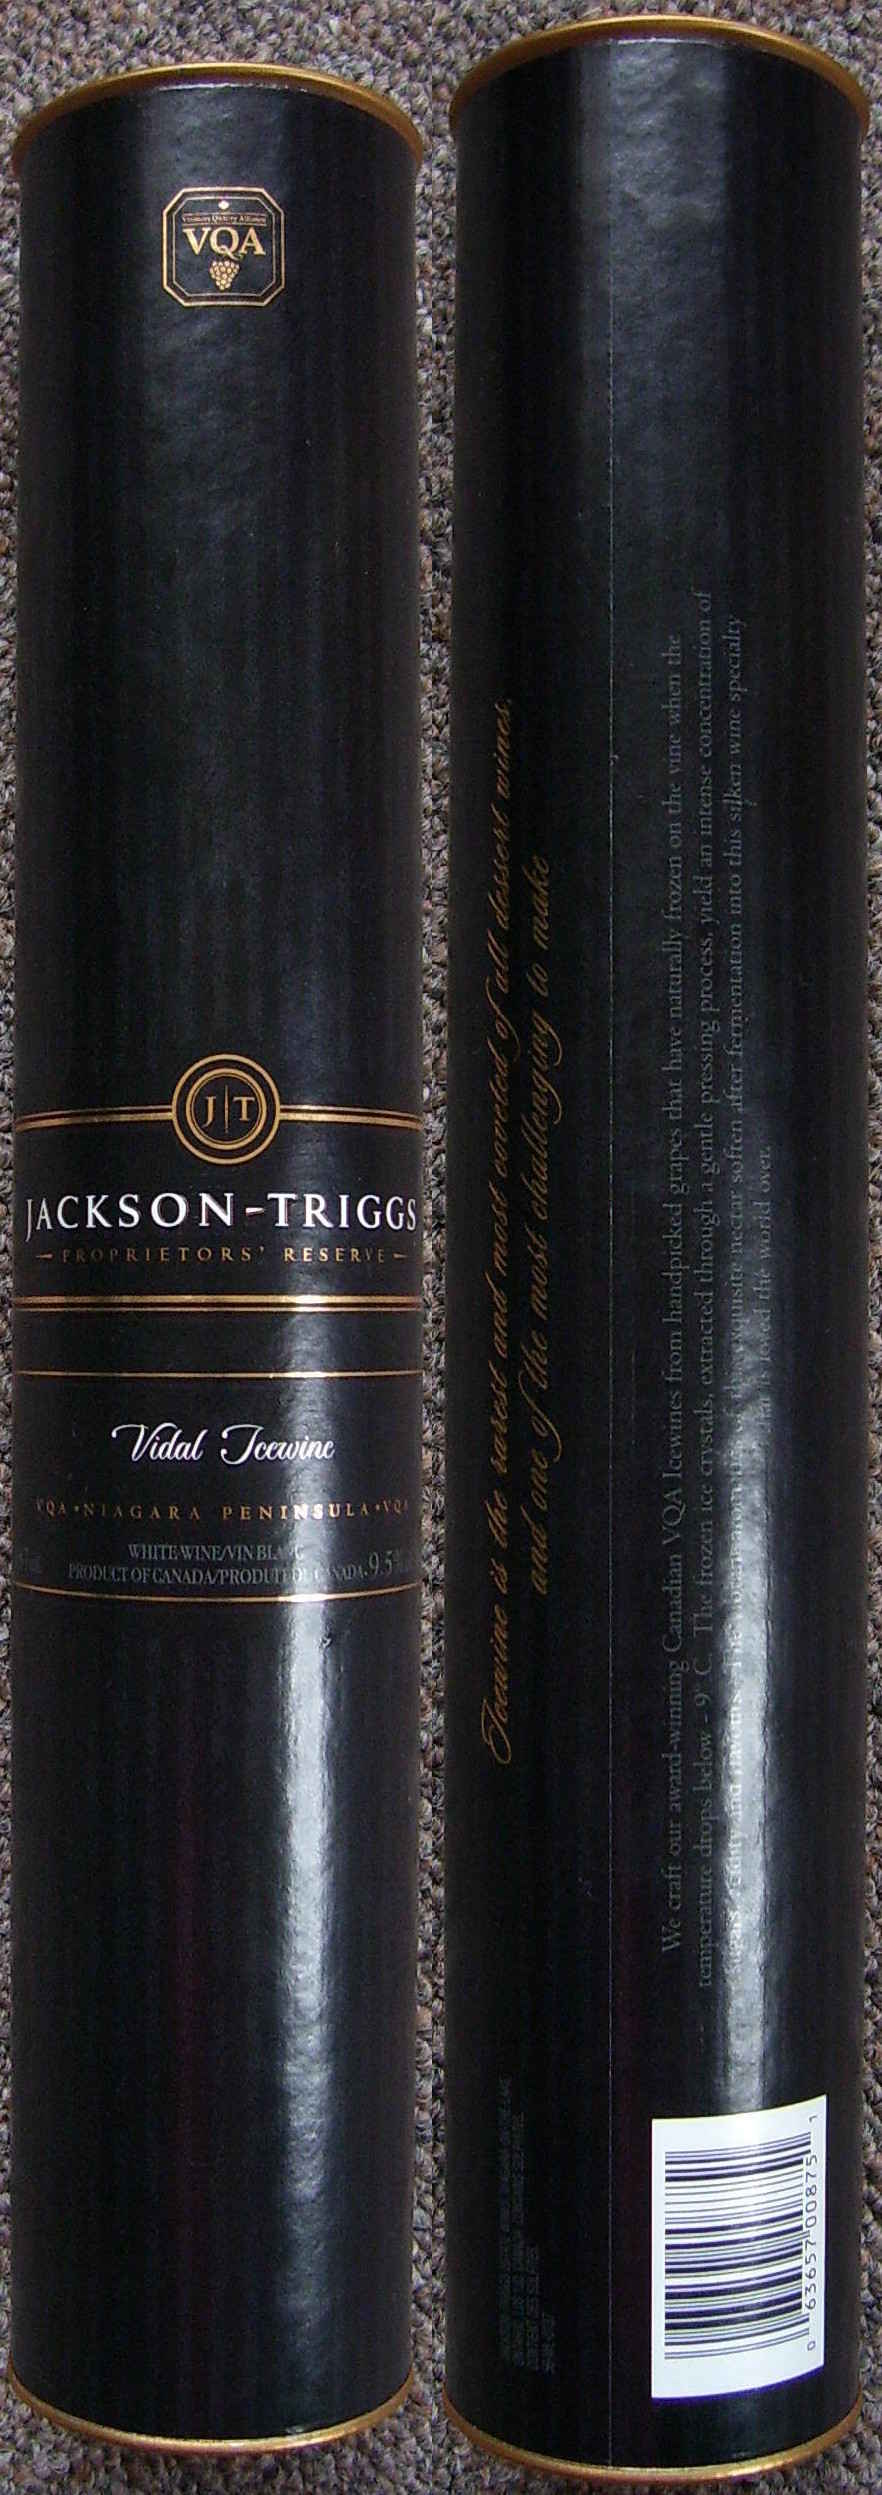 The ice-wine storage tube